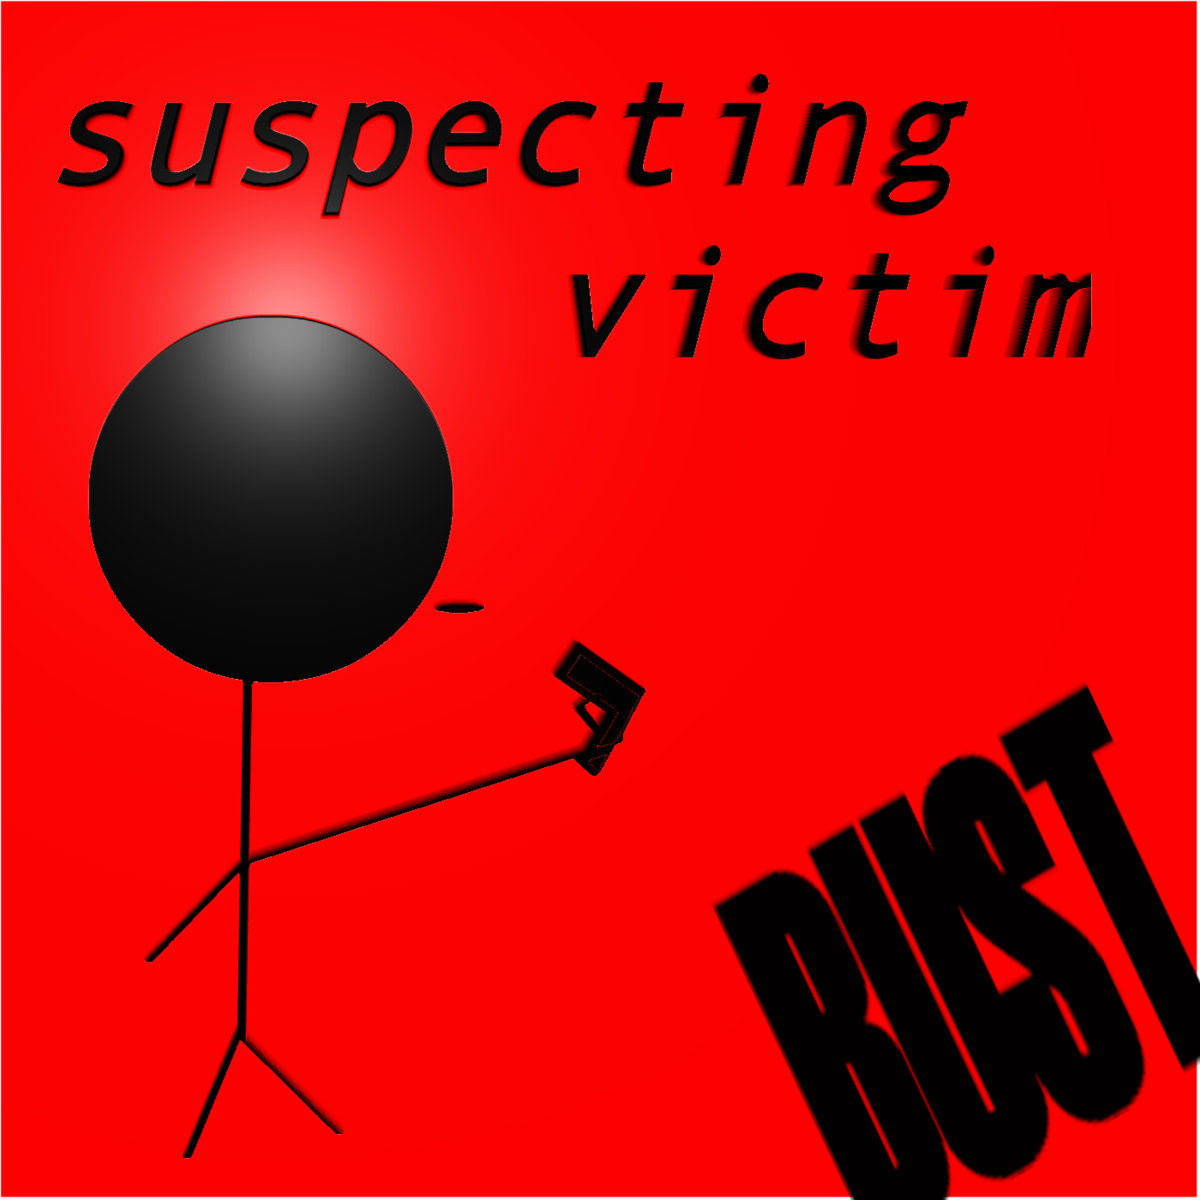 http://indiemusicpeople.com/Uploads/Suspecting_Victim_-_bust.jpg